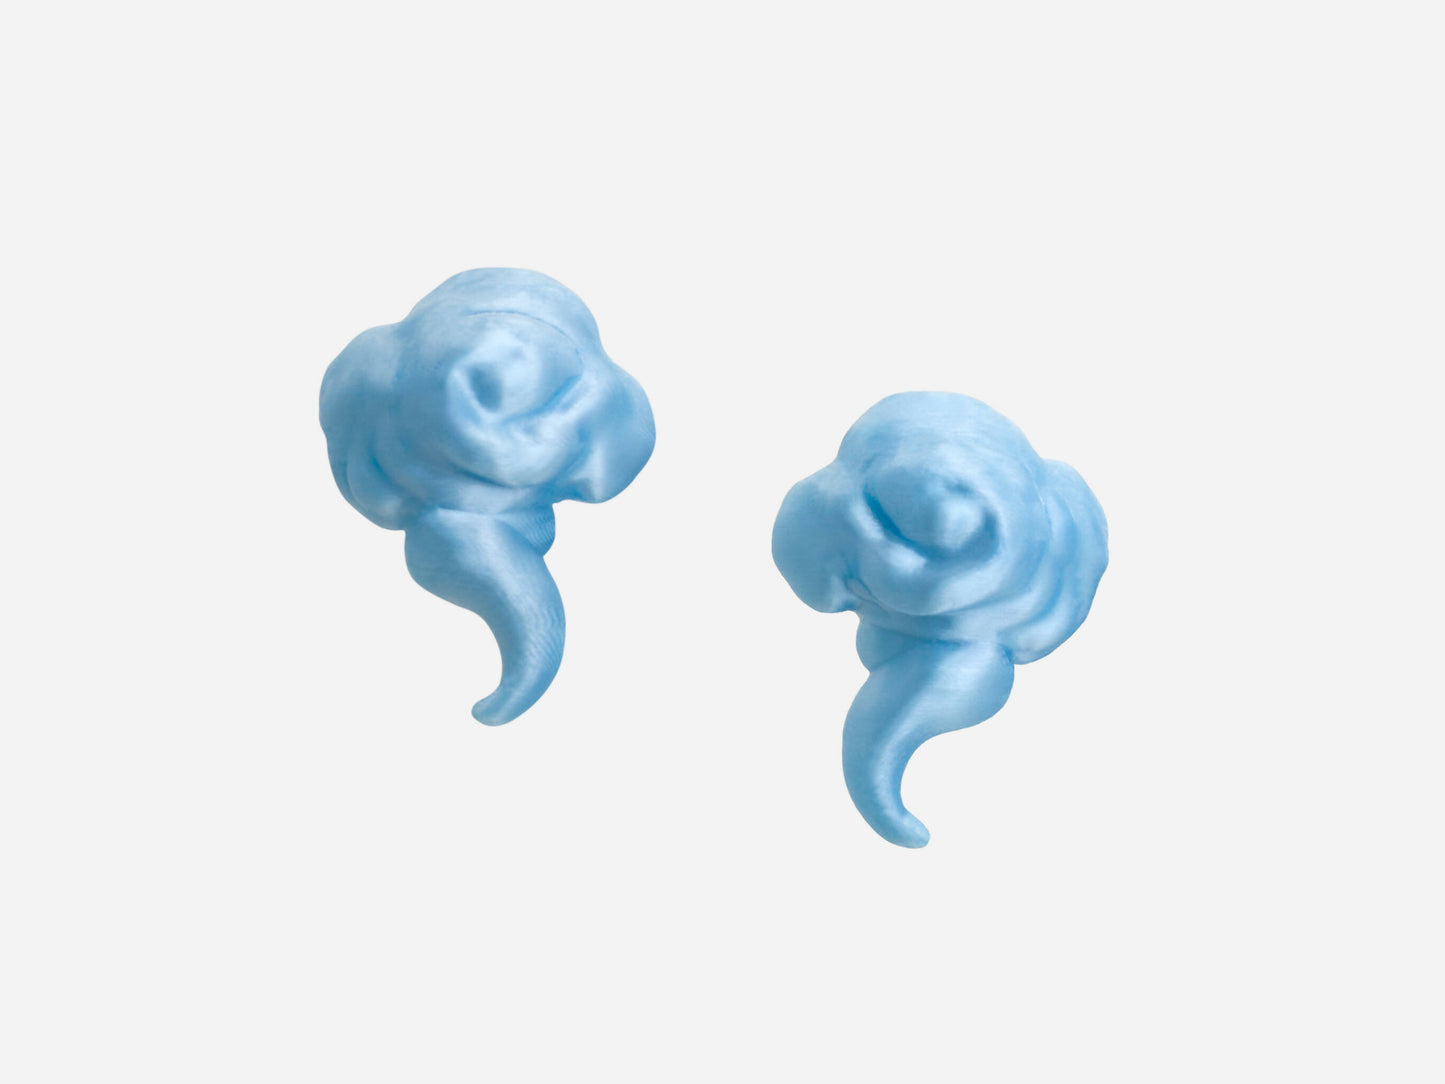 3D Printed Auspicious Clouds Earrings in Moonlight Blue